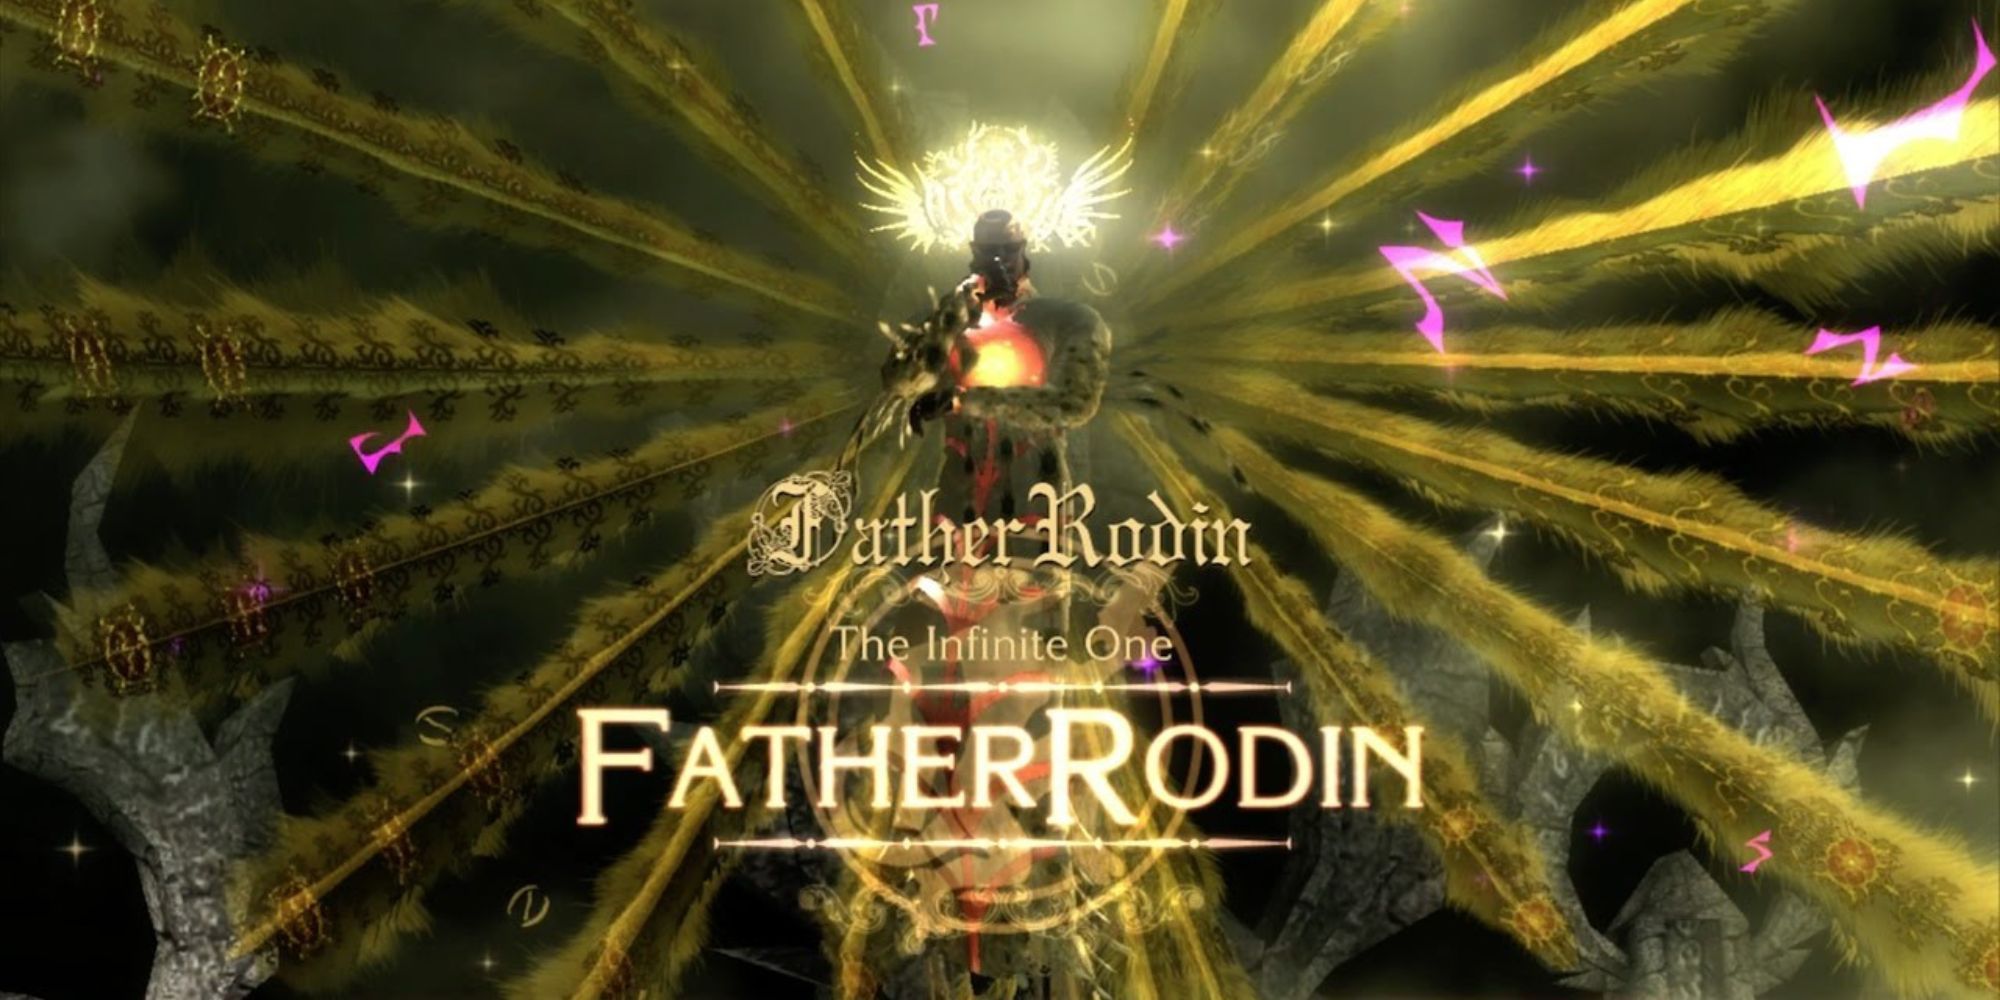 The Father Rodin boss battle intro screen in Bayonetta